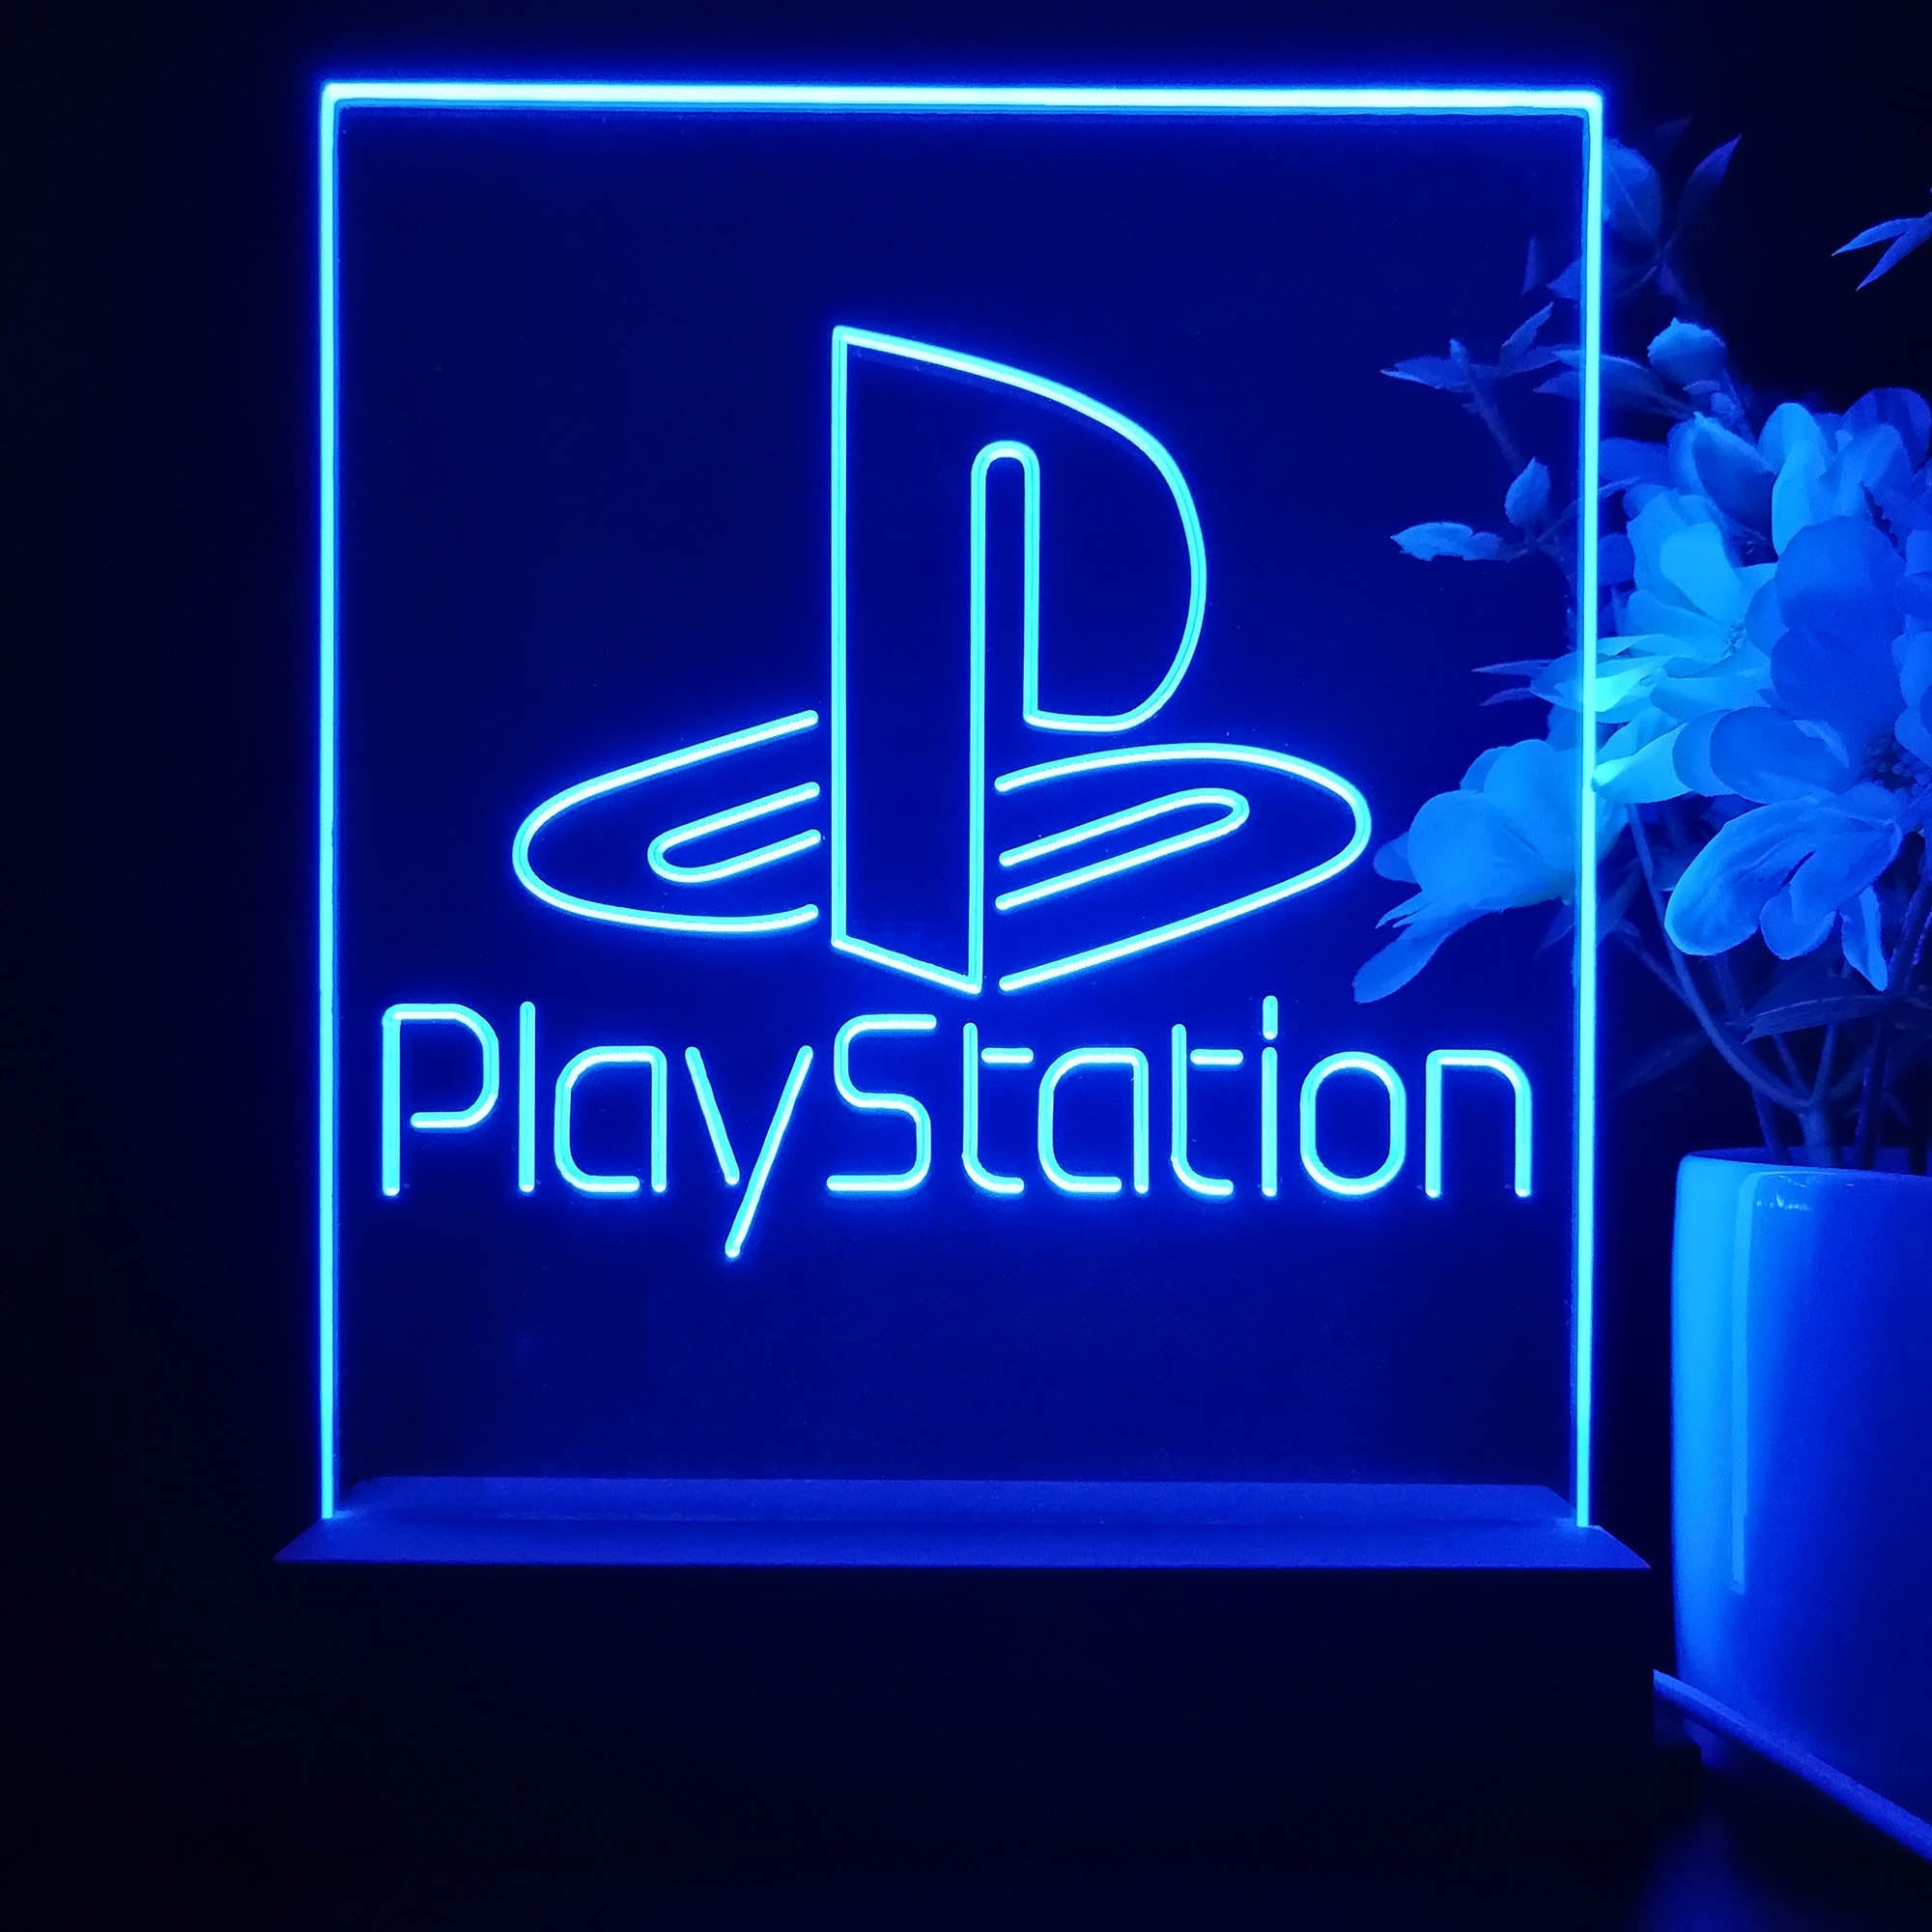 Playstation Gamer Sign Lamp Display | PRO SIGN